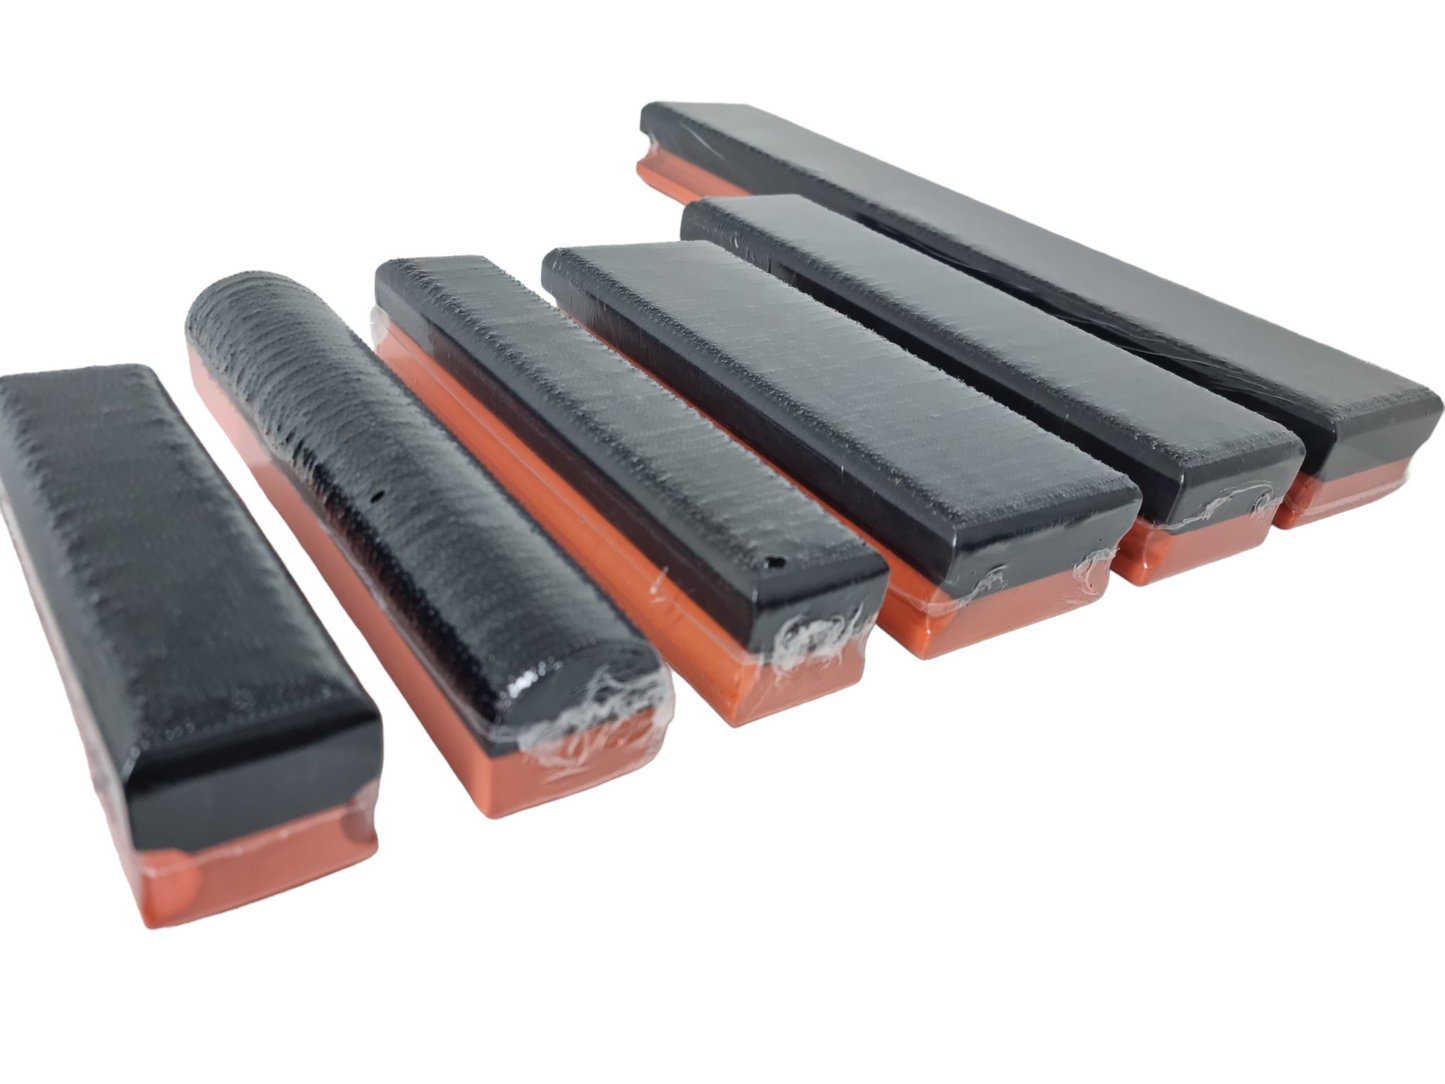 WTP TOOLS Sanding Block 6pcs Kit Velcro/Stick High Quality Auto Body